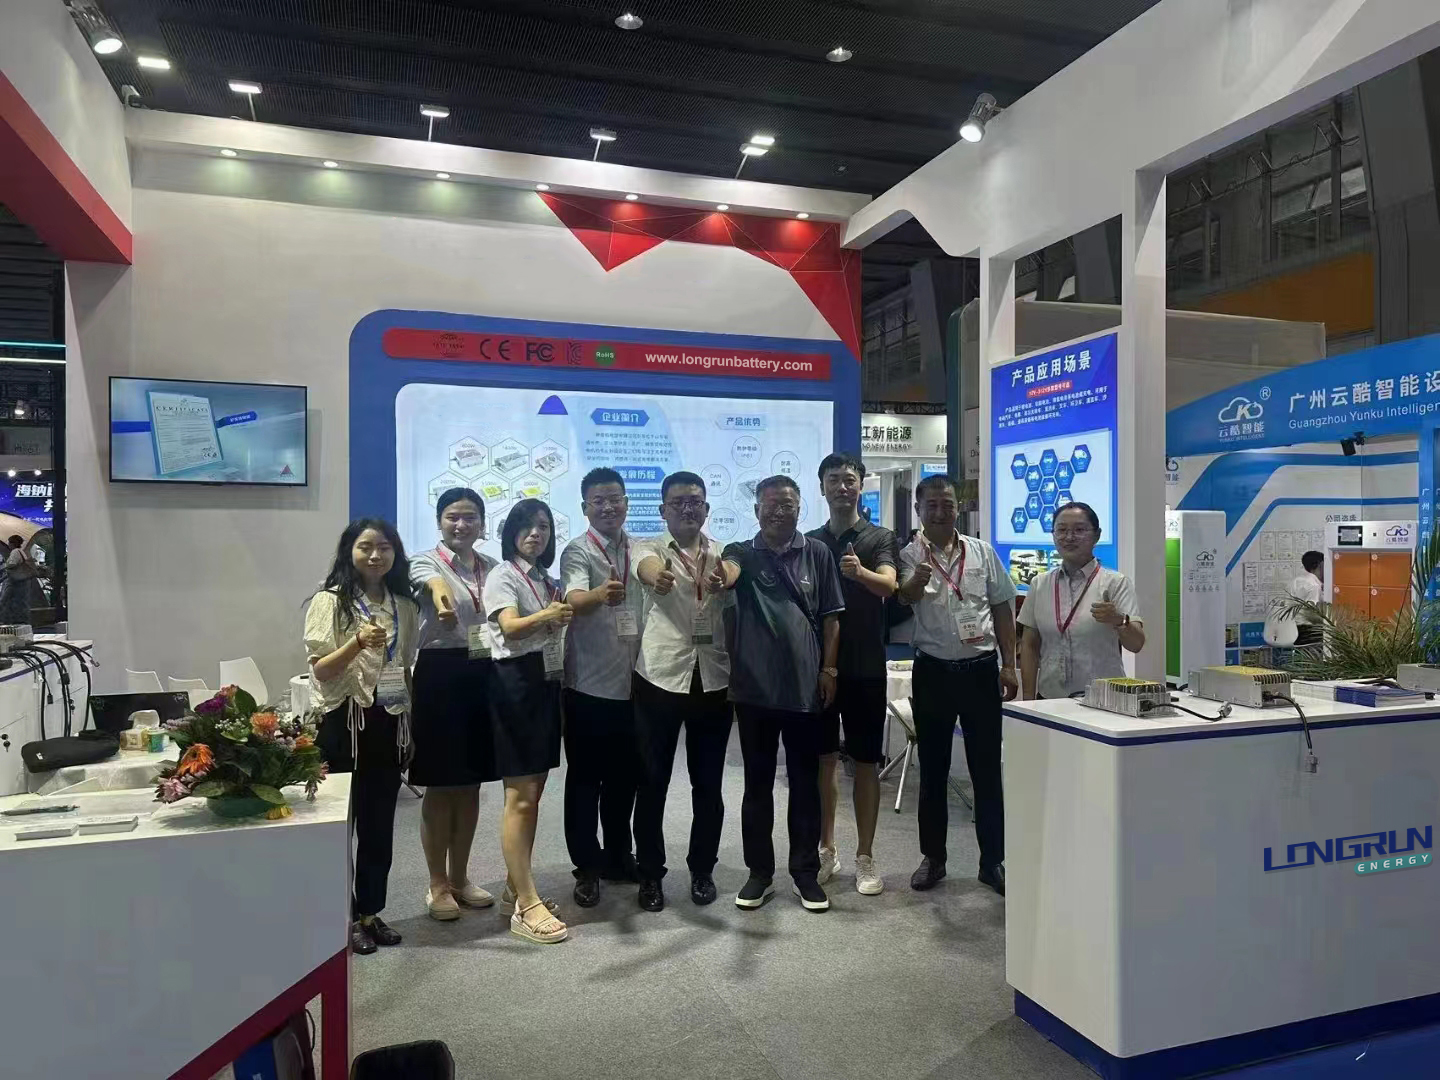 Guangzhou Asia Pacific Battery izložba pozvala je moju tvrtku da prisustvuje